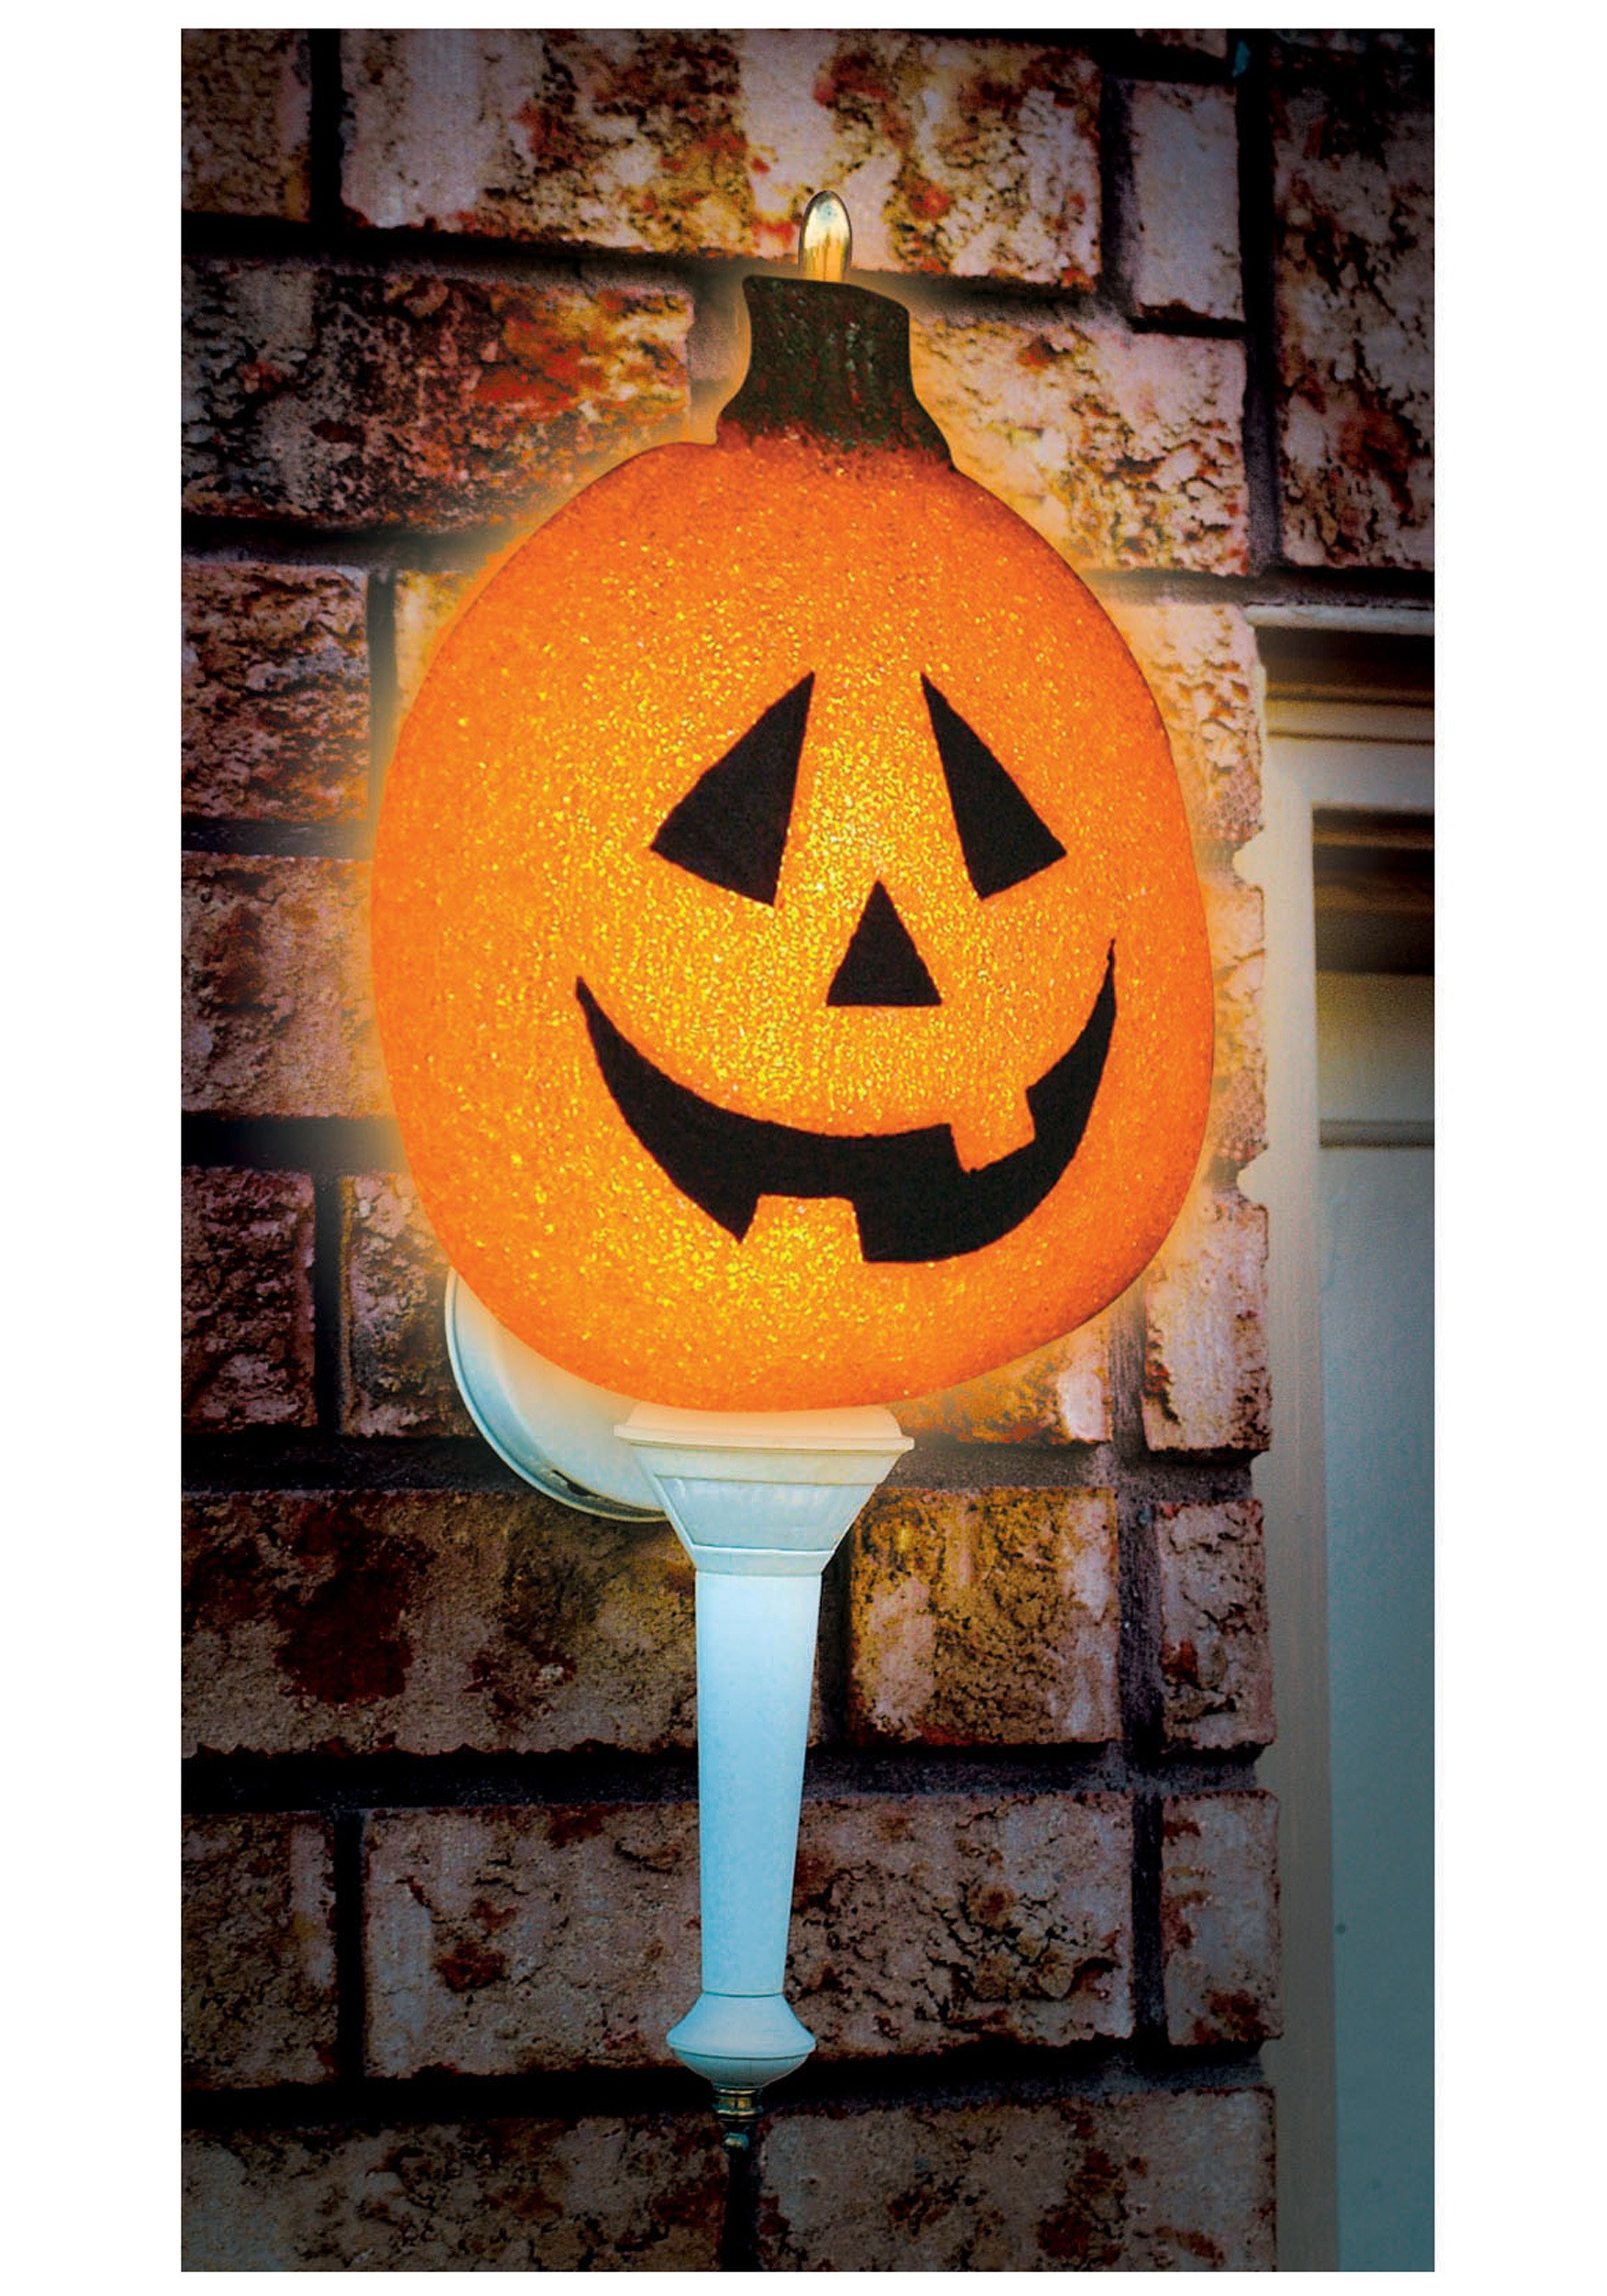 Halloween Lamp Shade Covers
 Sparkling Pumpkin Porch Light Cover Outdoor Halloween